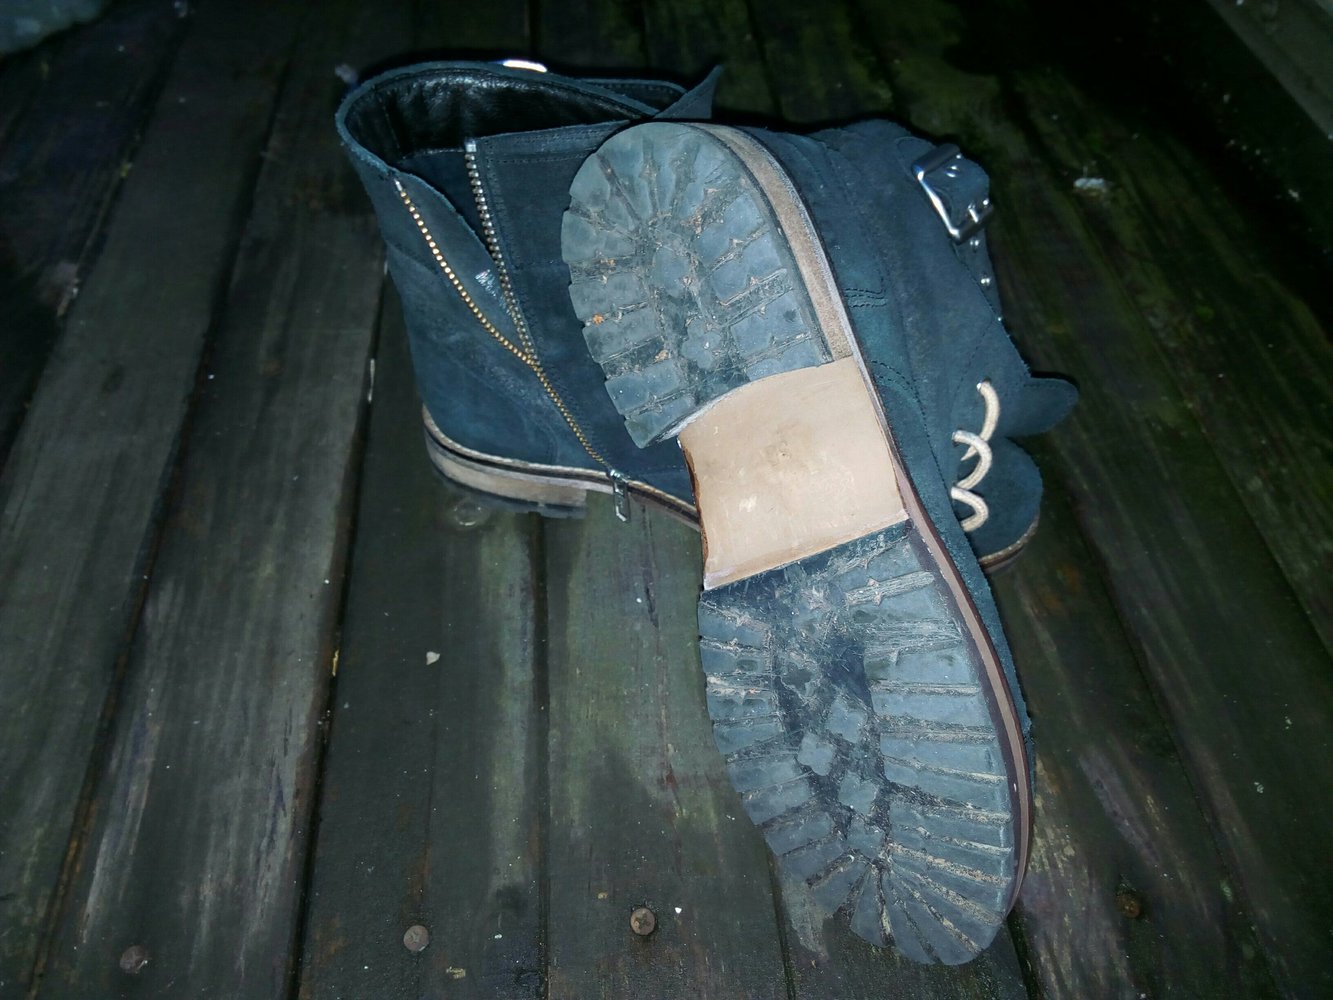 Blaue Stiefel aus Wildleder. Sisley Gr. 37